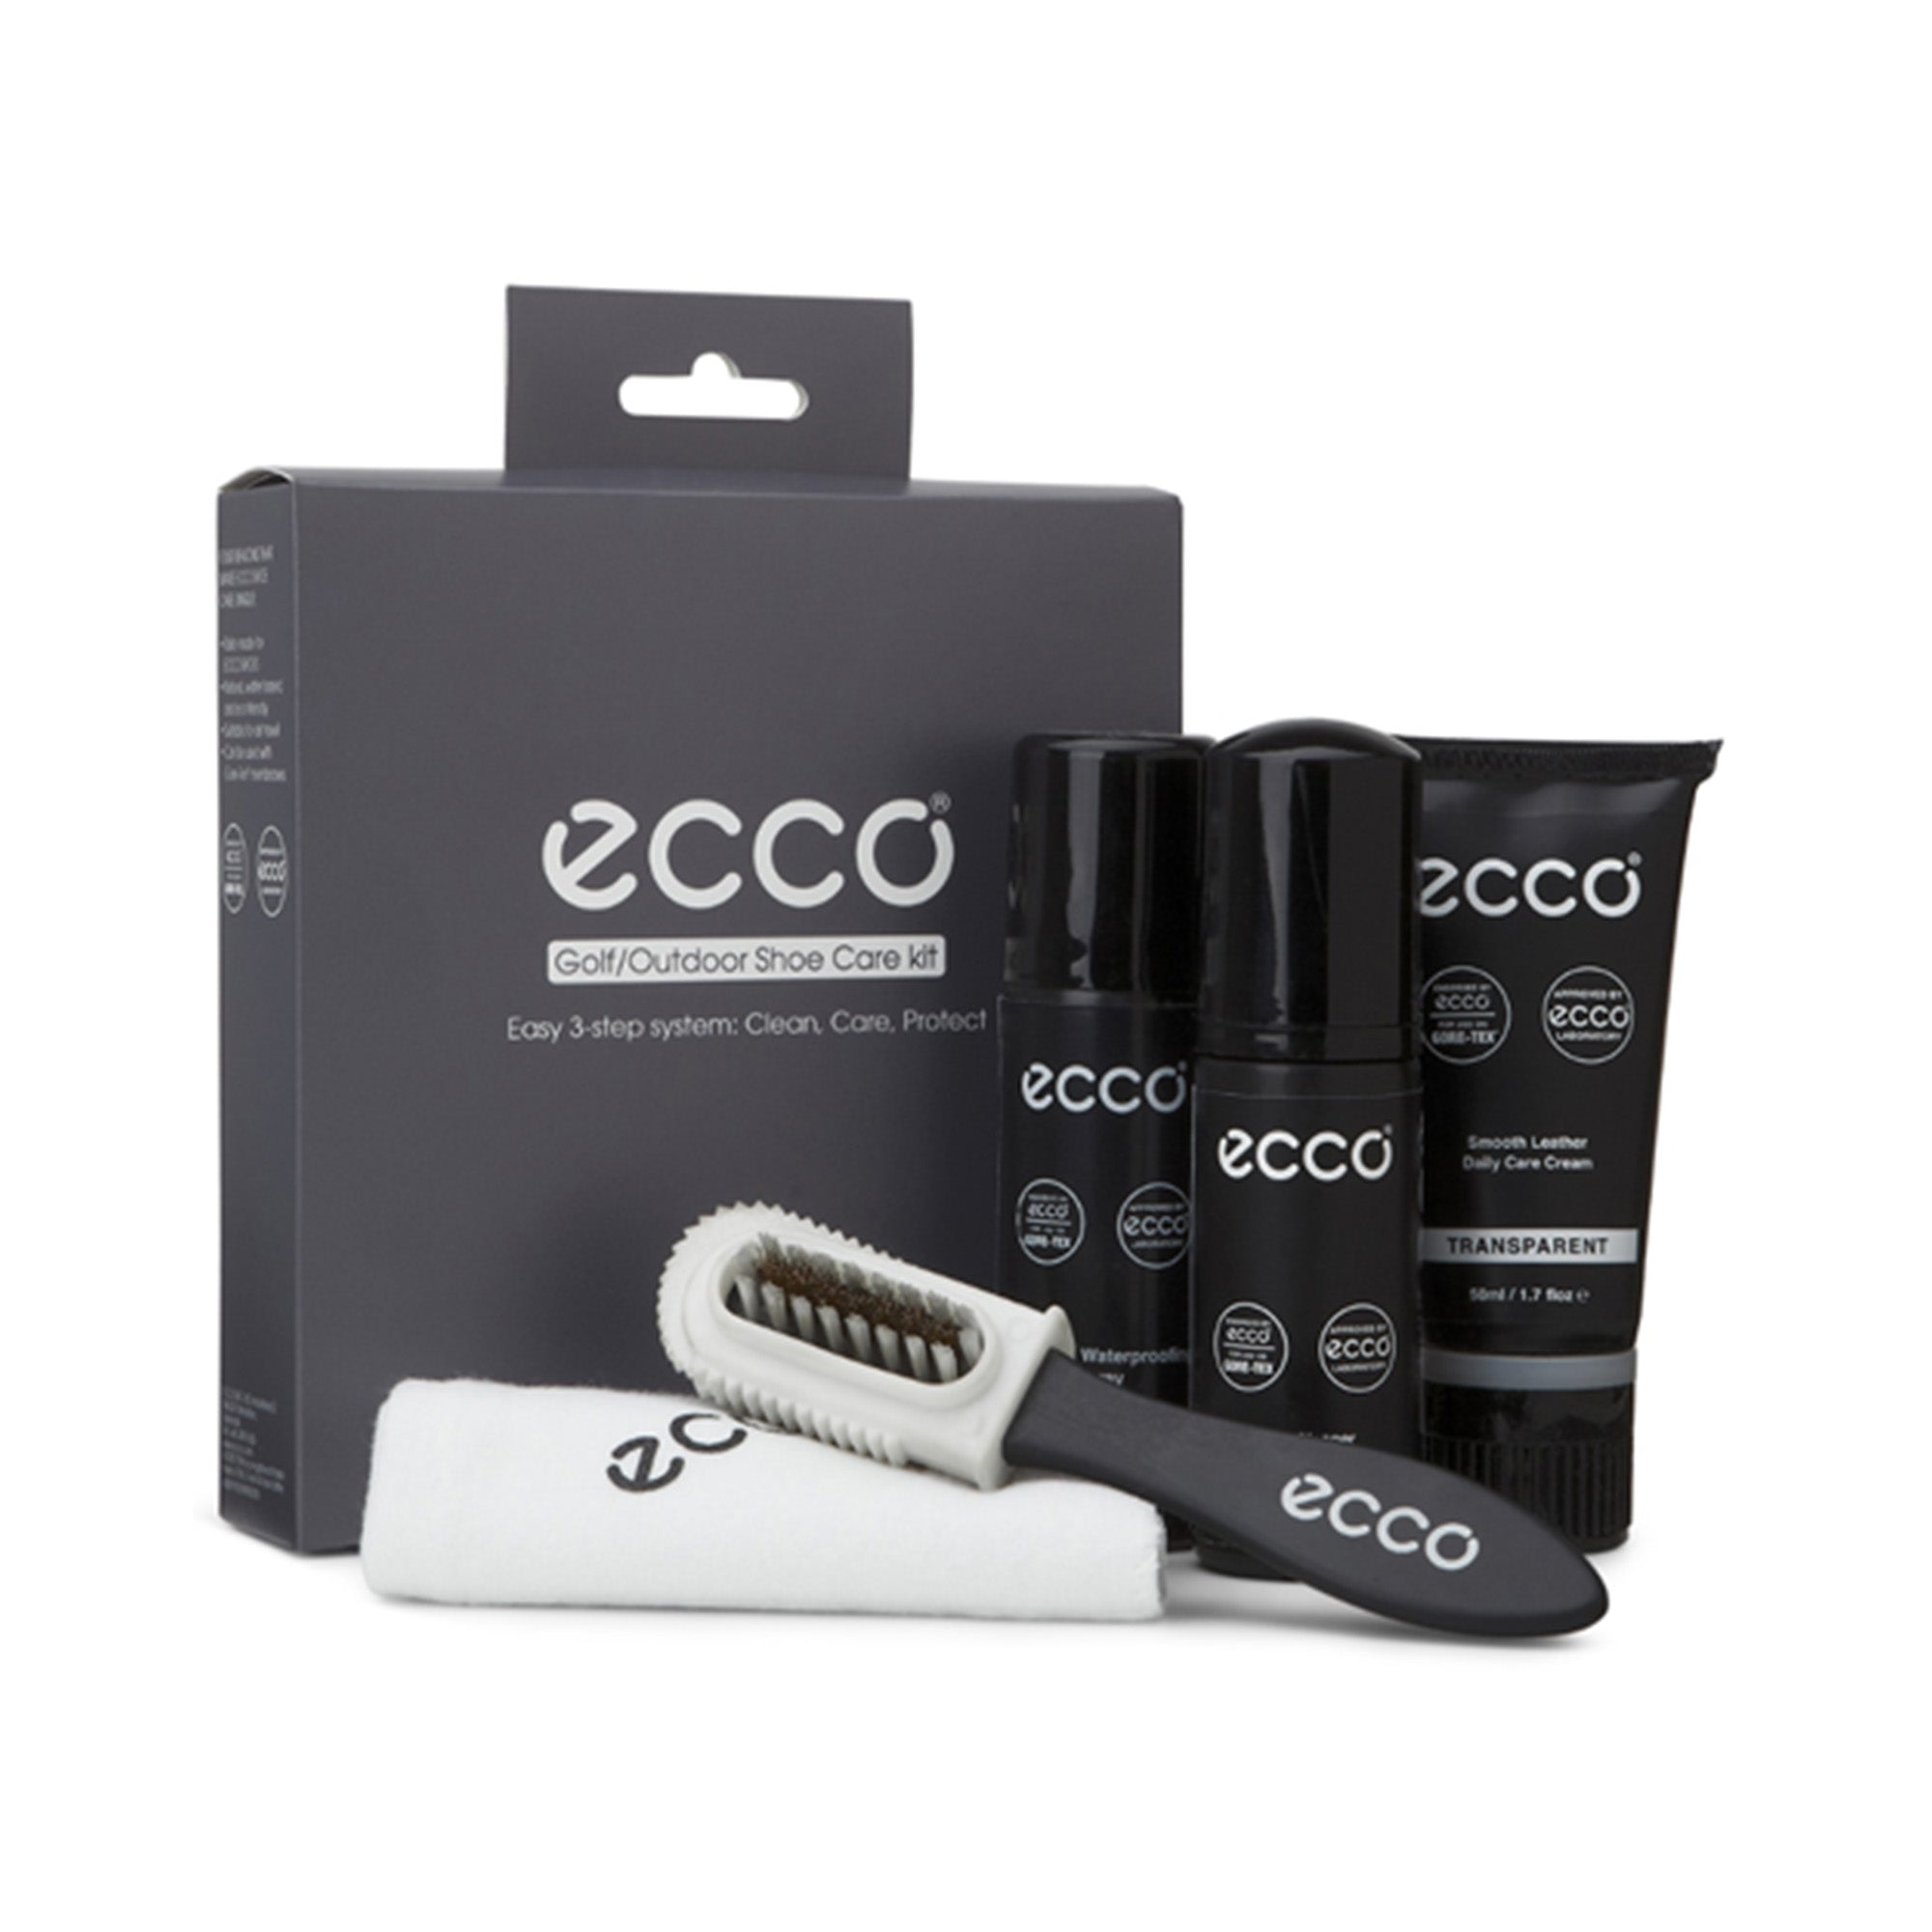 Ecco Golf/Outdoor Shoe Care Kit 9033996 